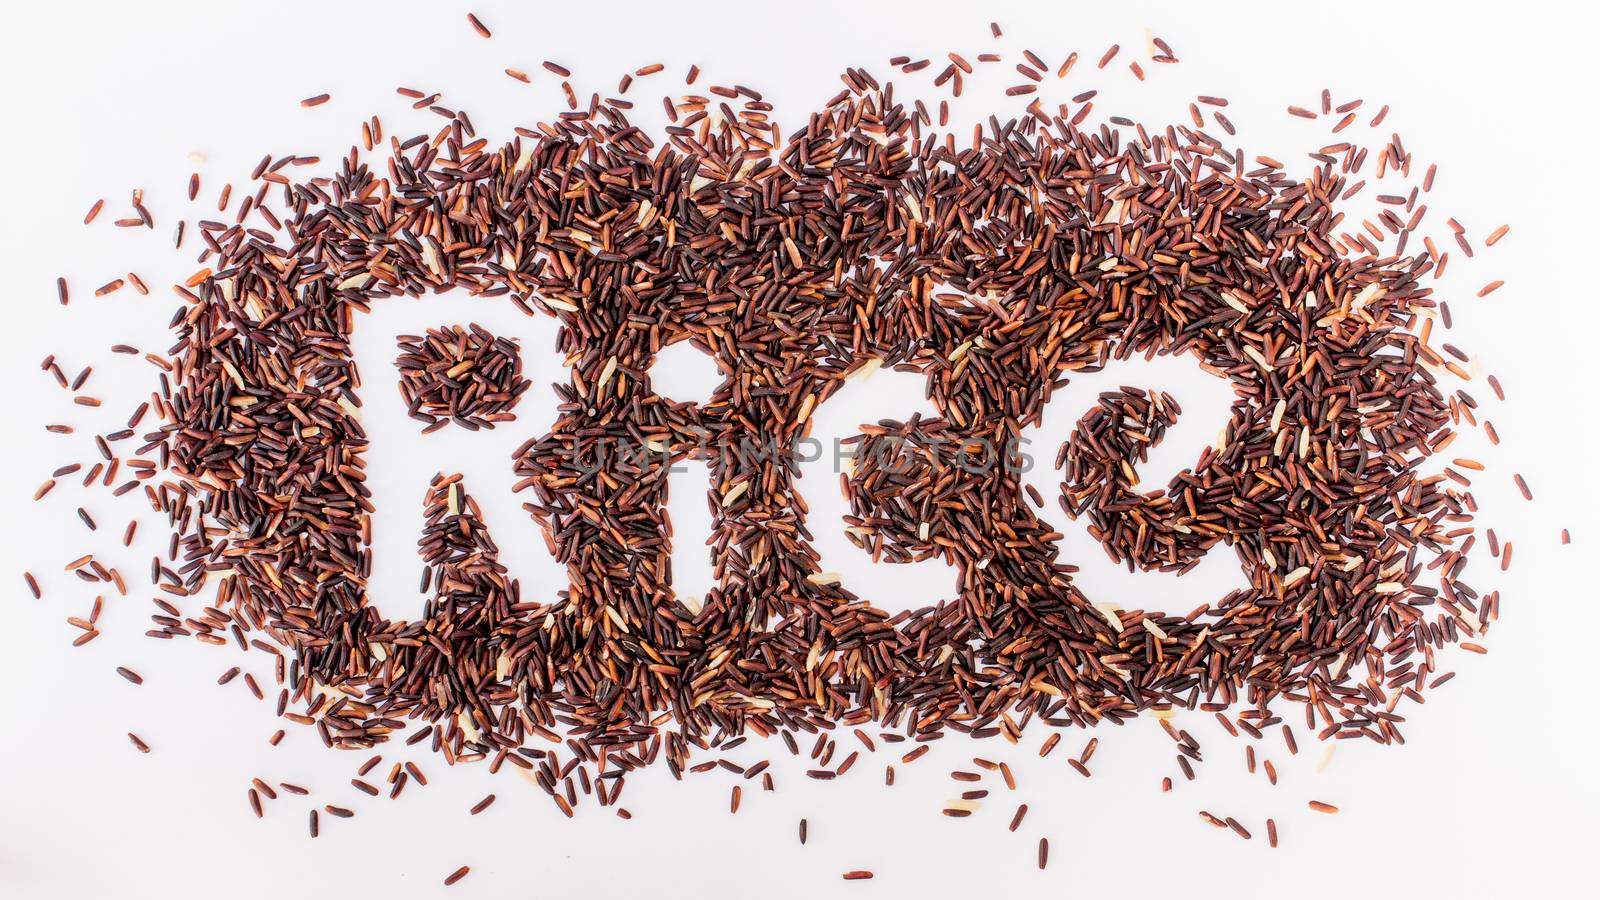 The black rice on ground